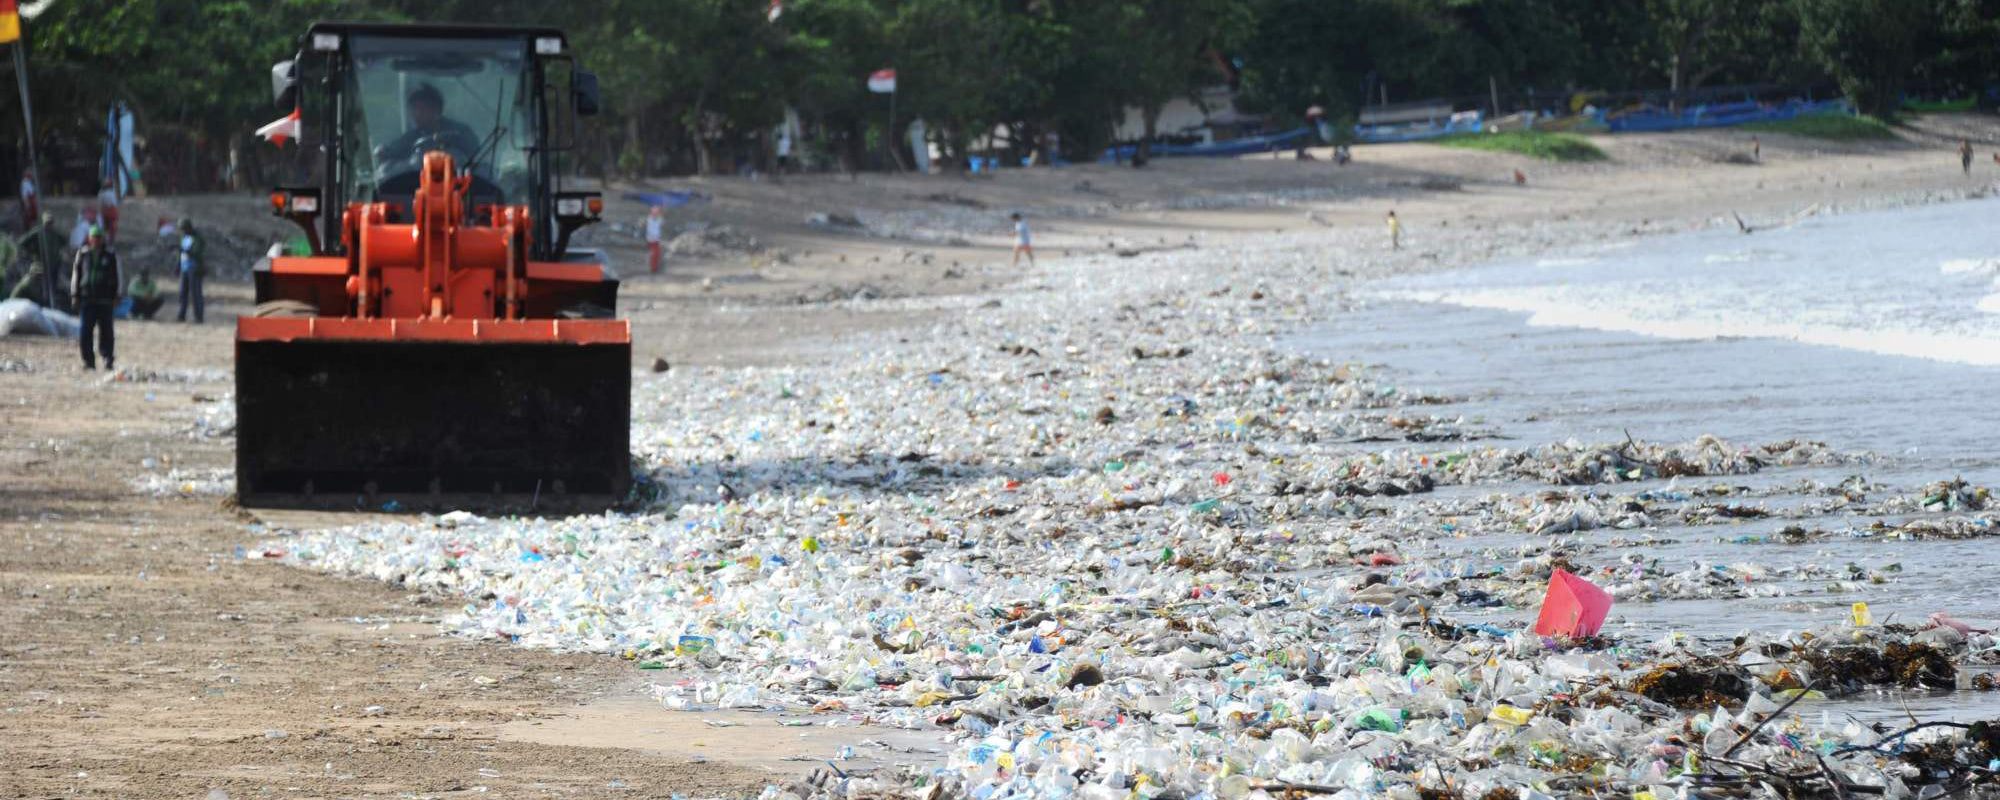 Plastic waste in Bali - AFP-JIJI